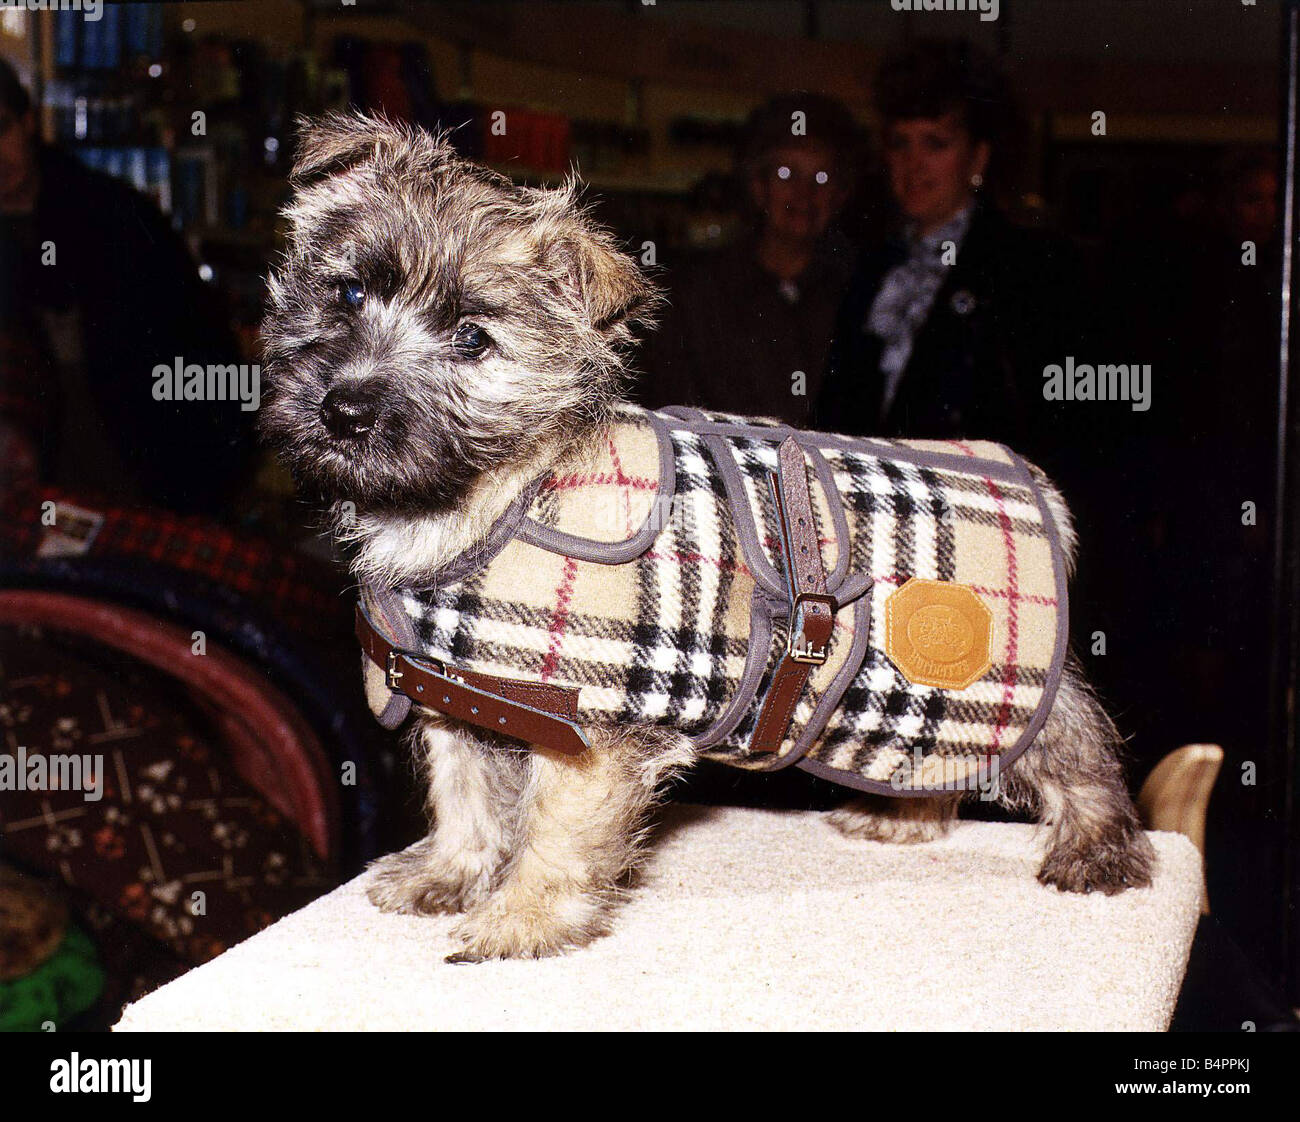 Hund in Burberry Mantel für 43 ca. 1995 Stockfotografie - Alamy